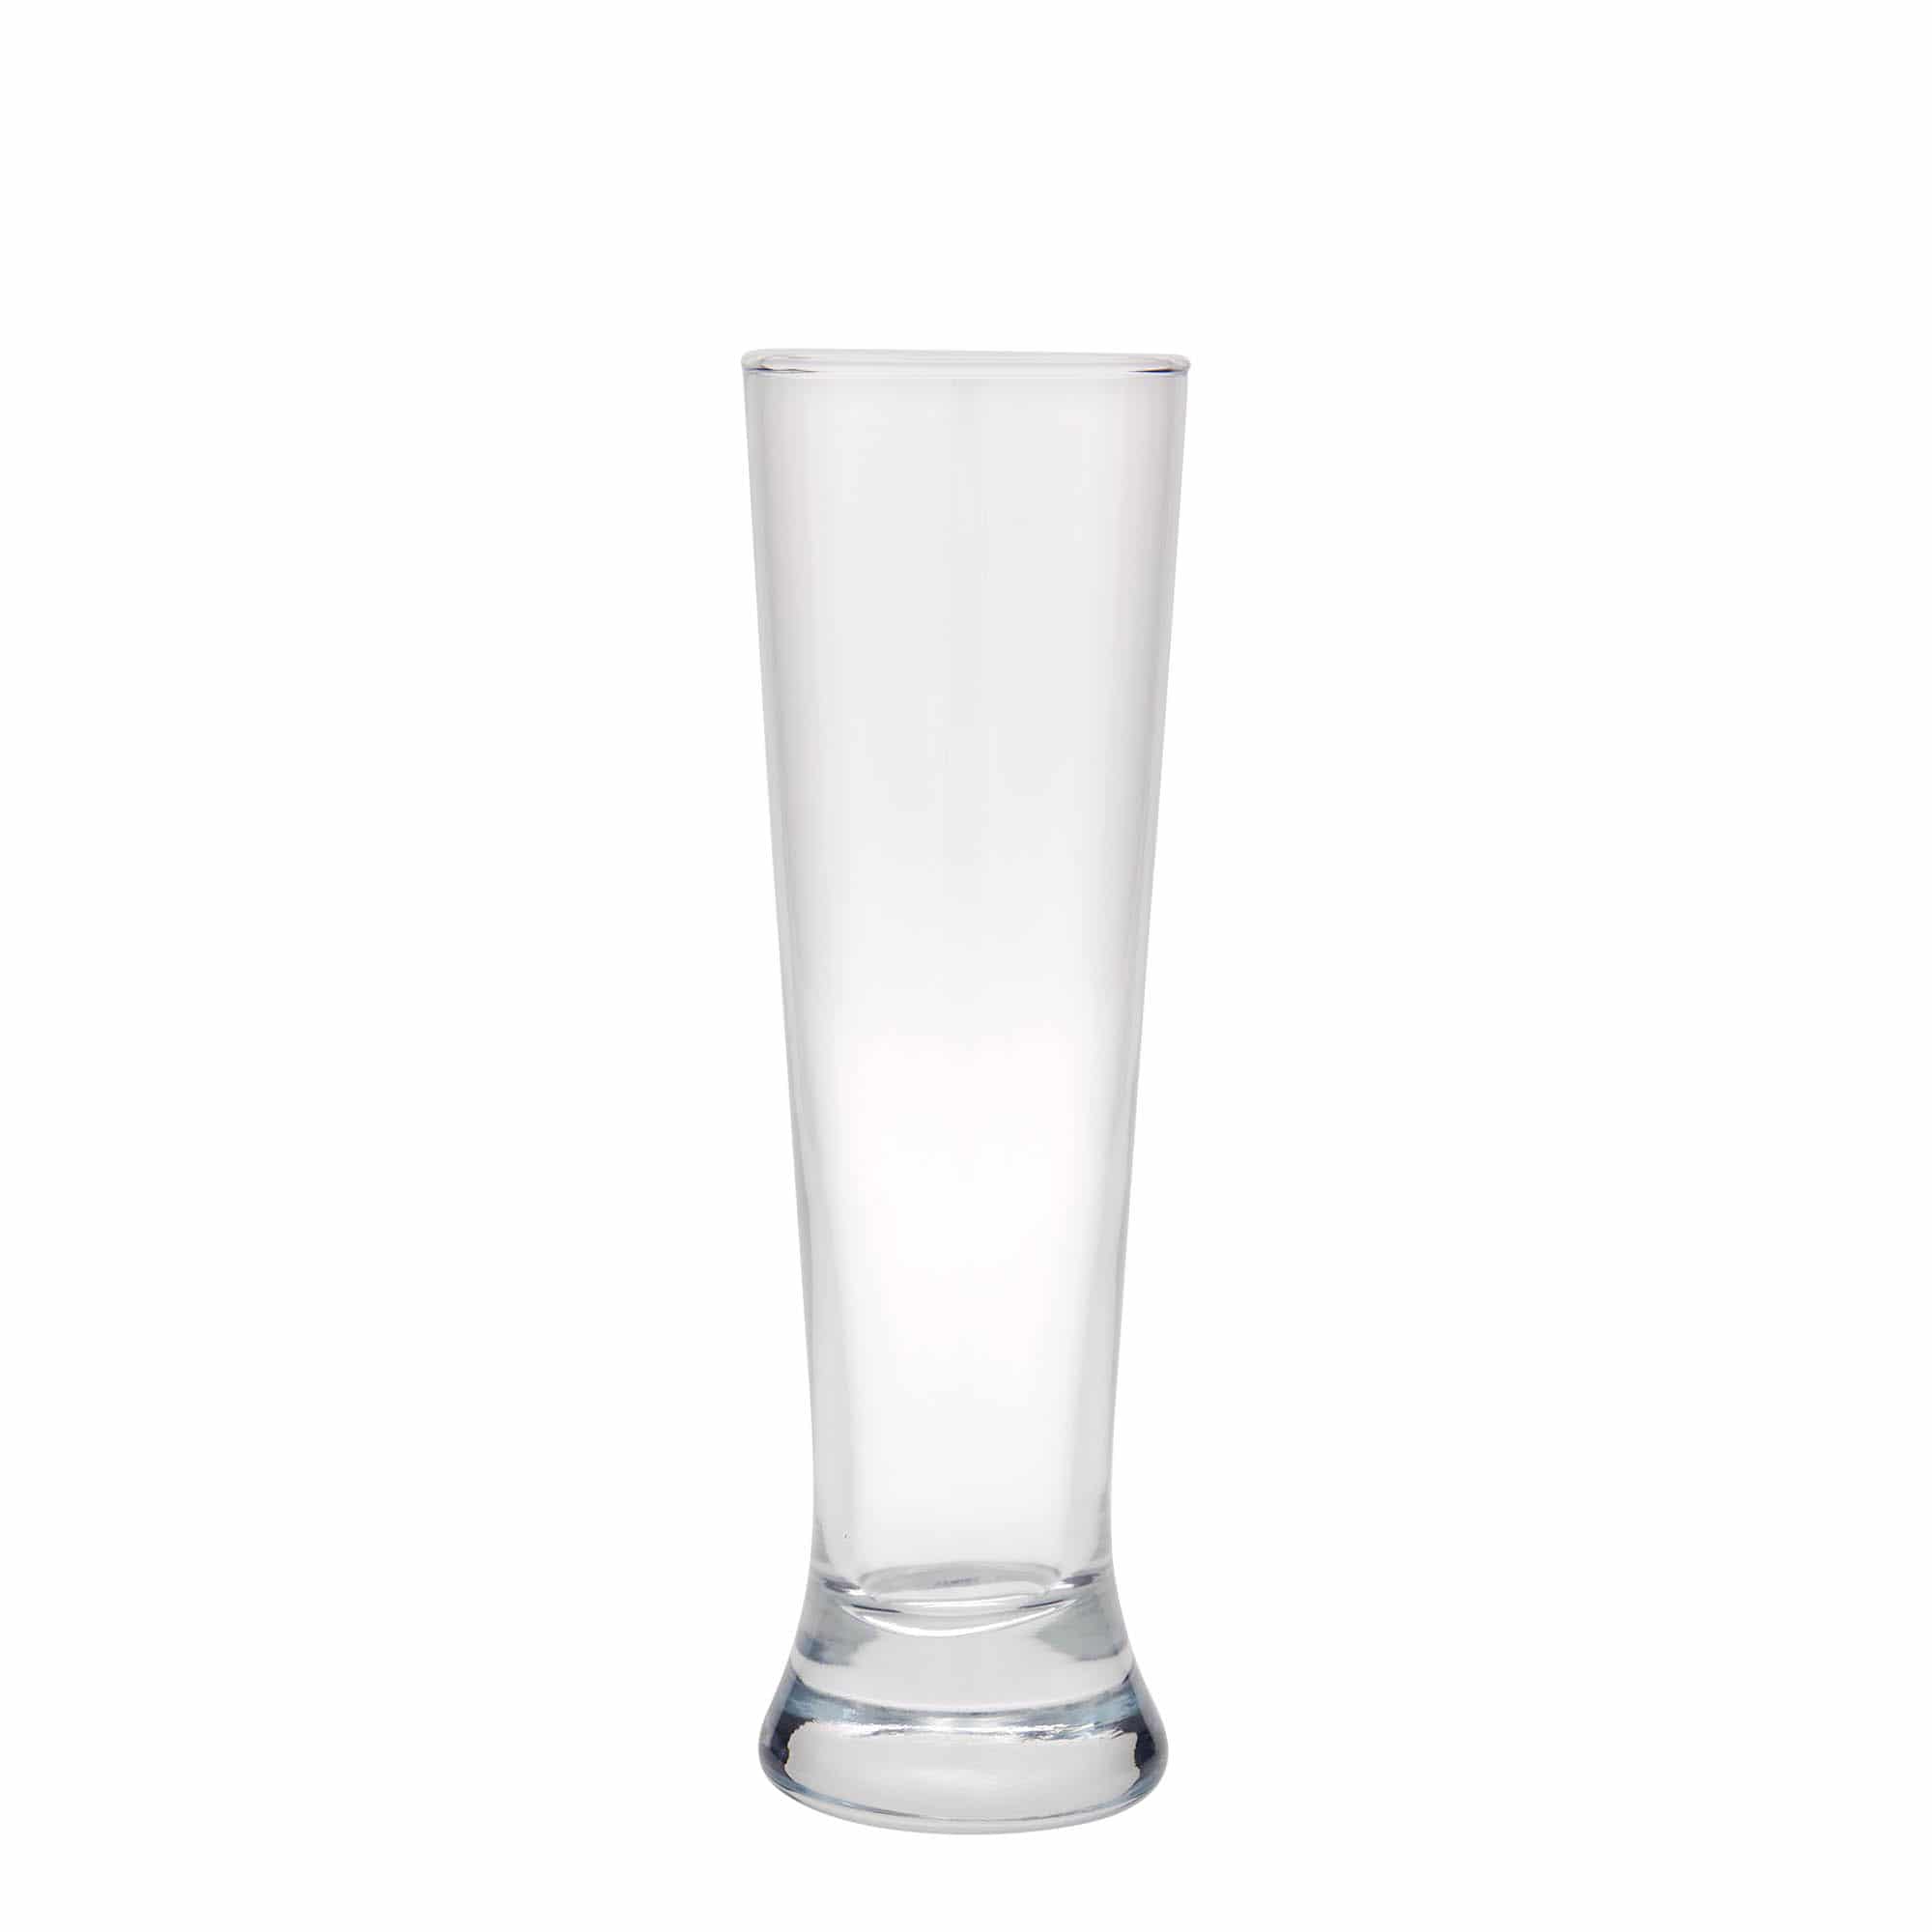 300 ml beer glass 'Merkur', glass